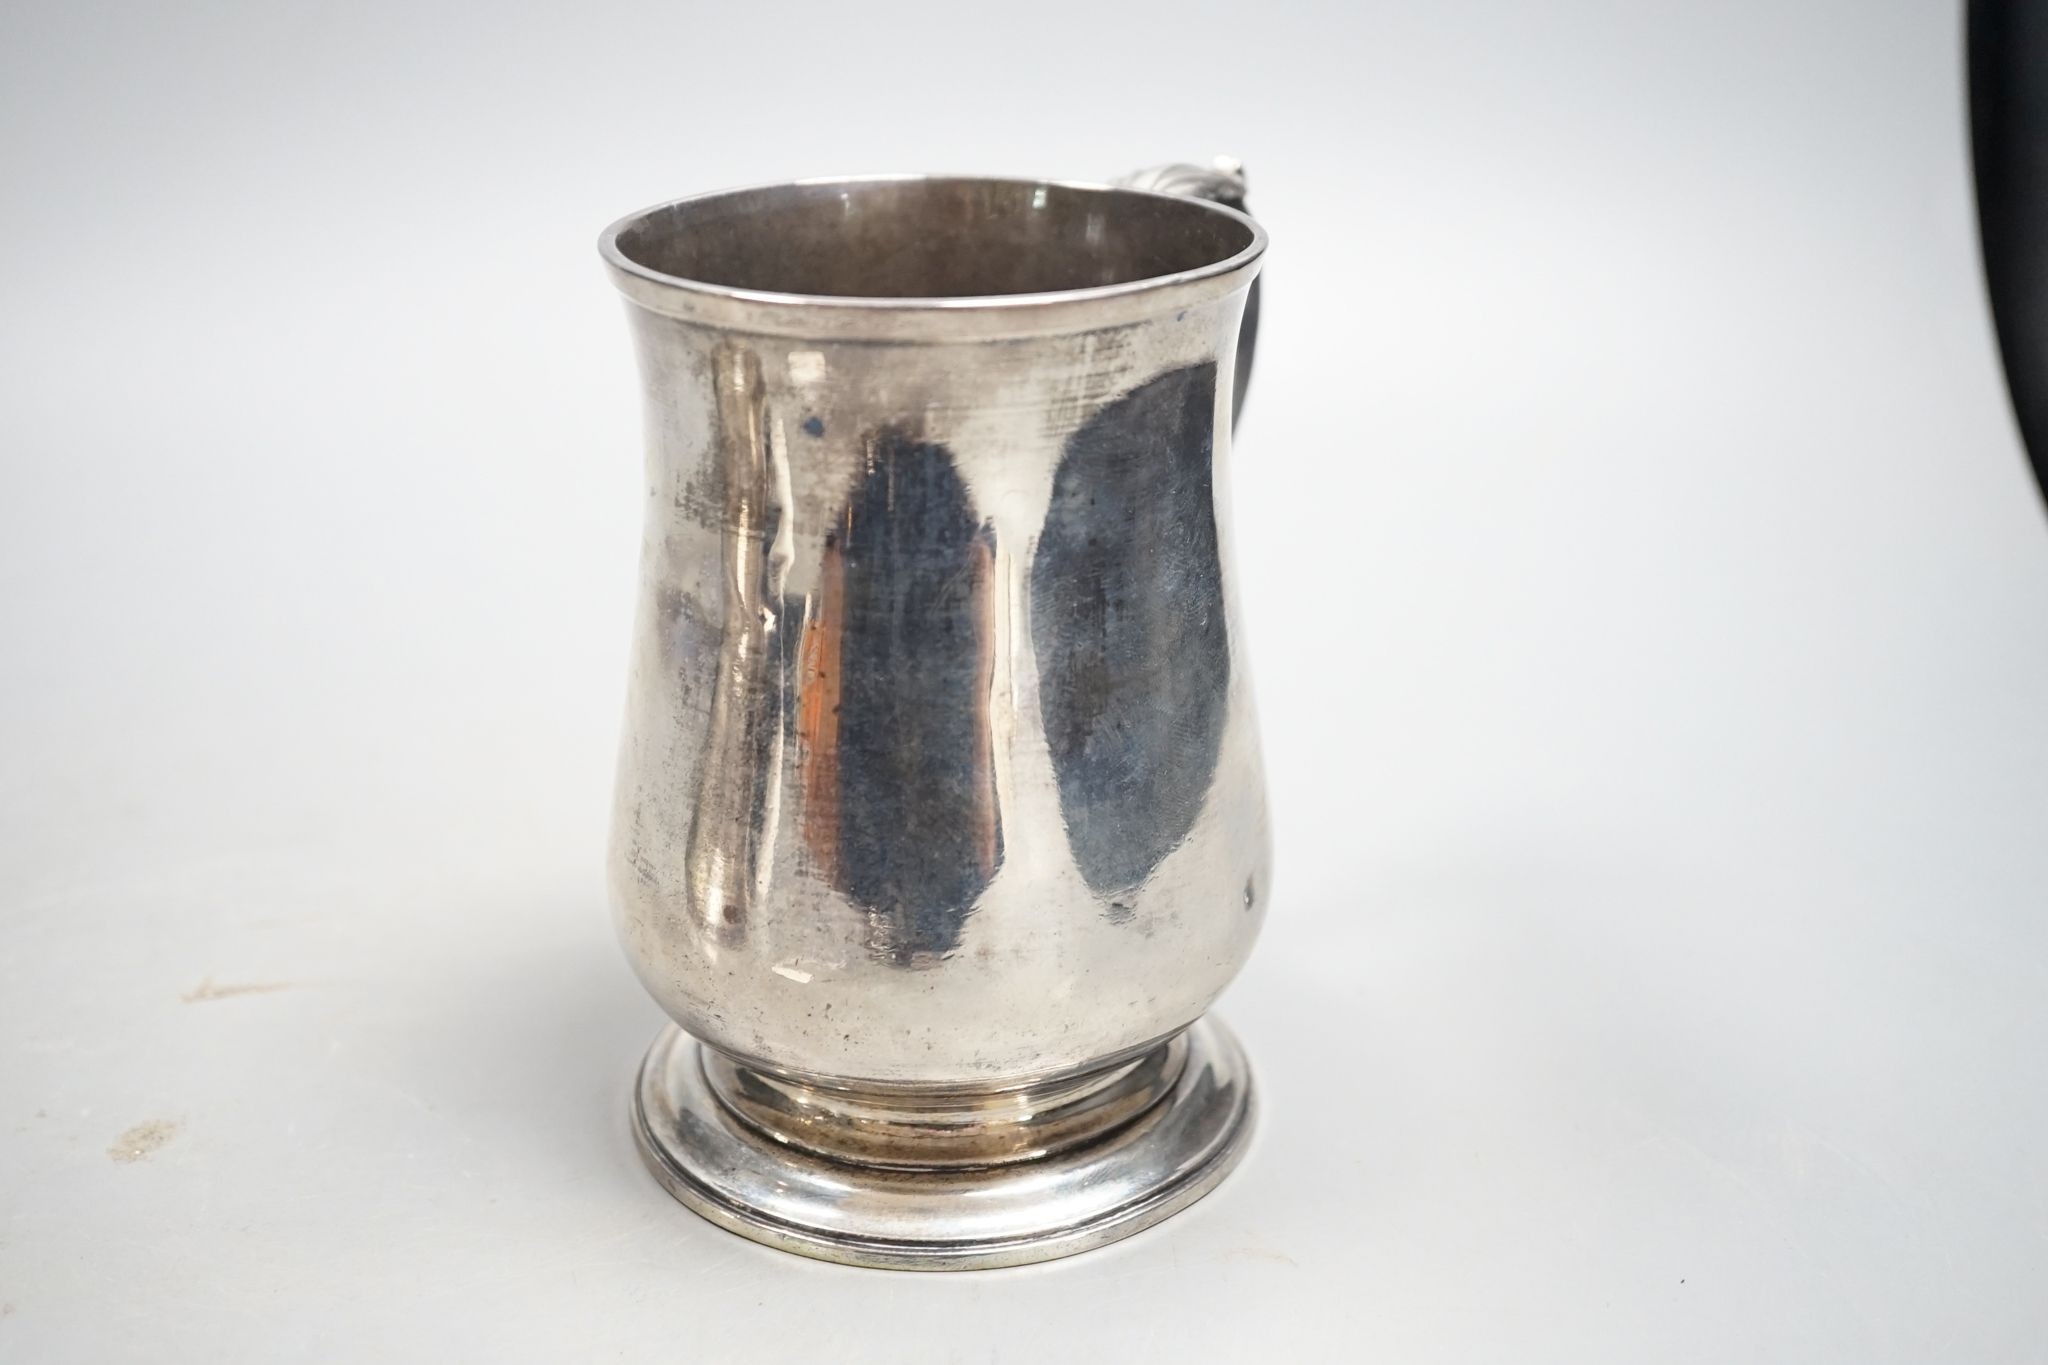 A George III silver baluster mug, Charles Wright, London, 1772, 13cm, 13.5oz.